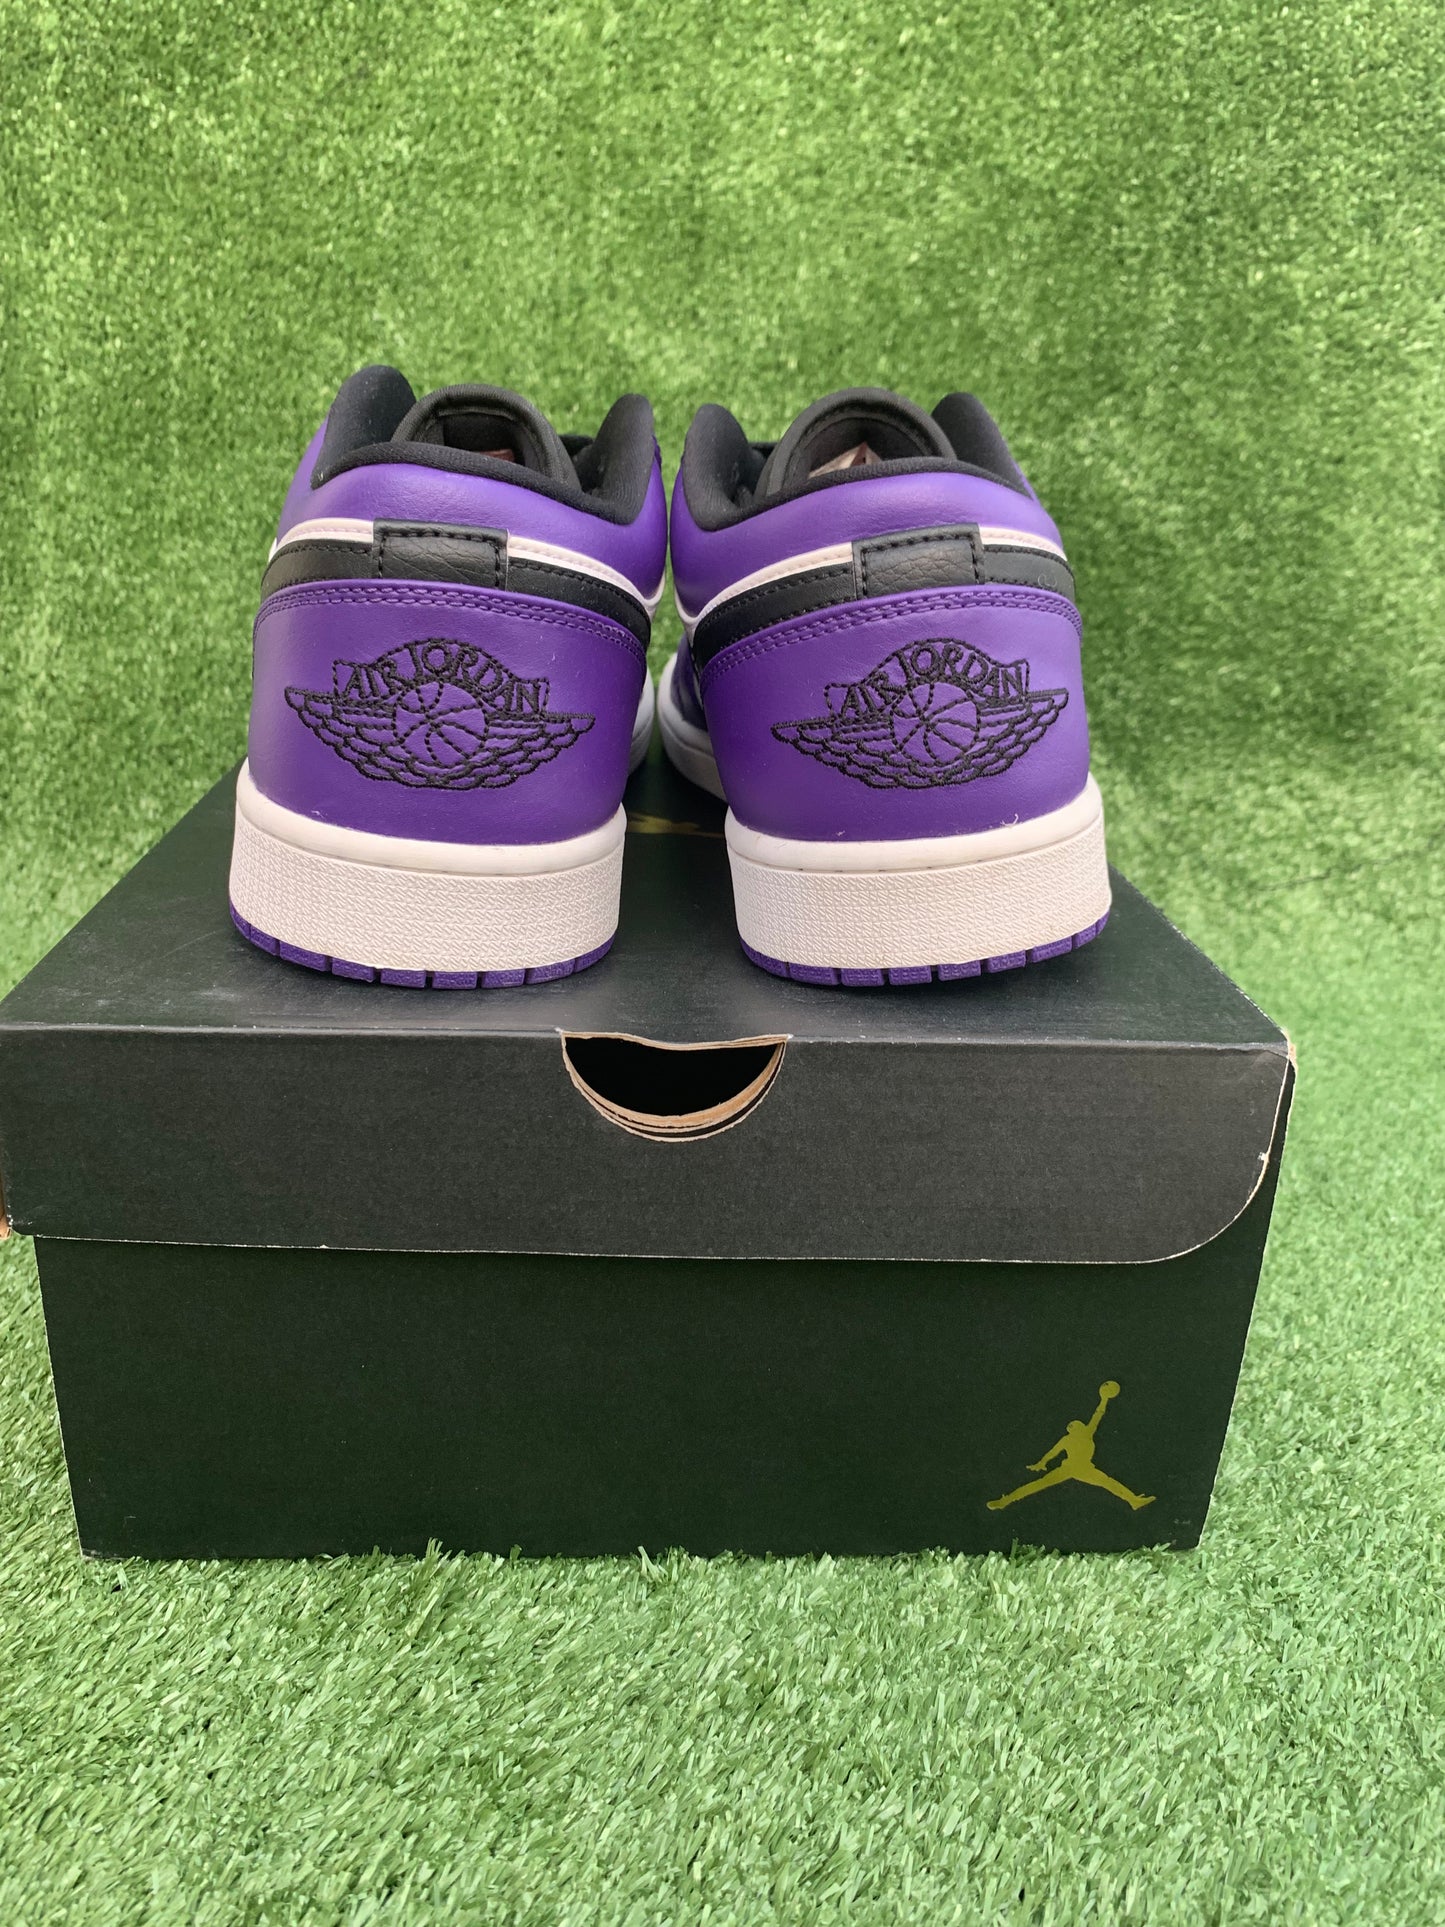 Jordan 1 Low - Court Purple [USED]